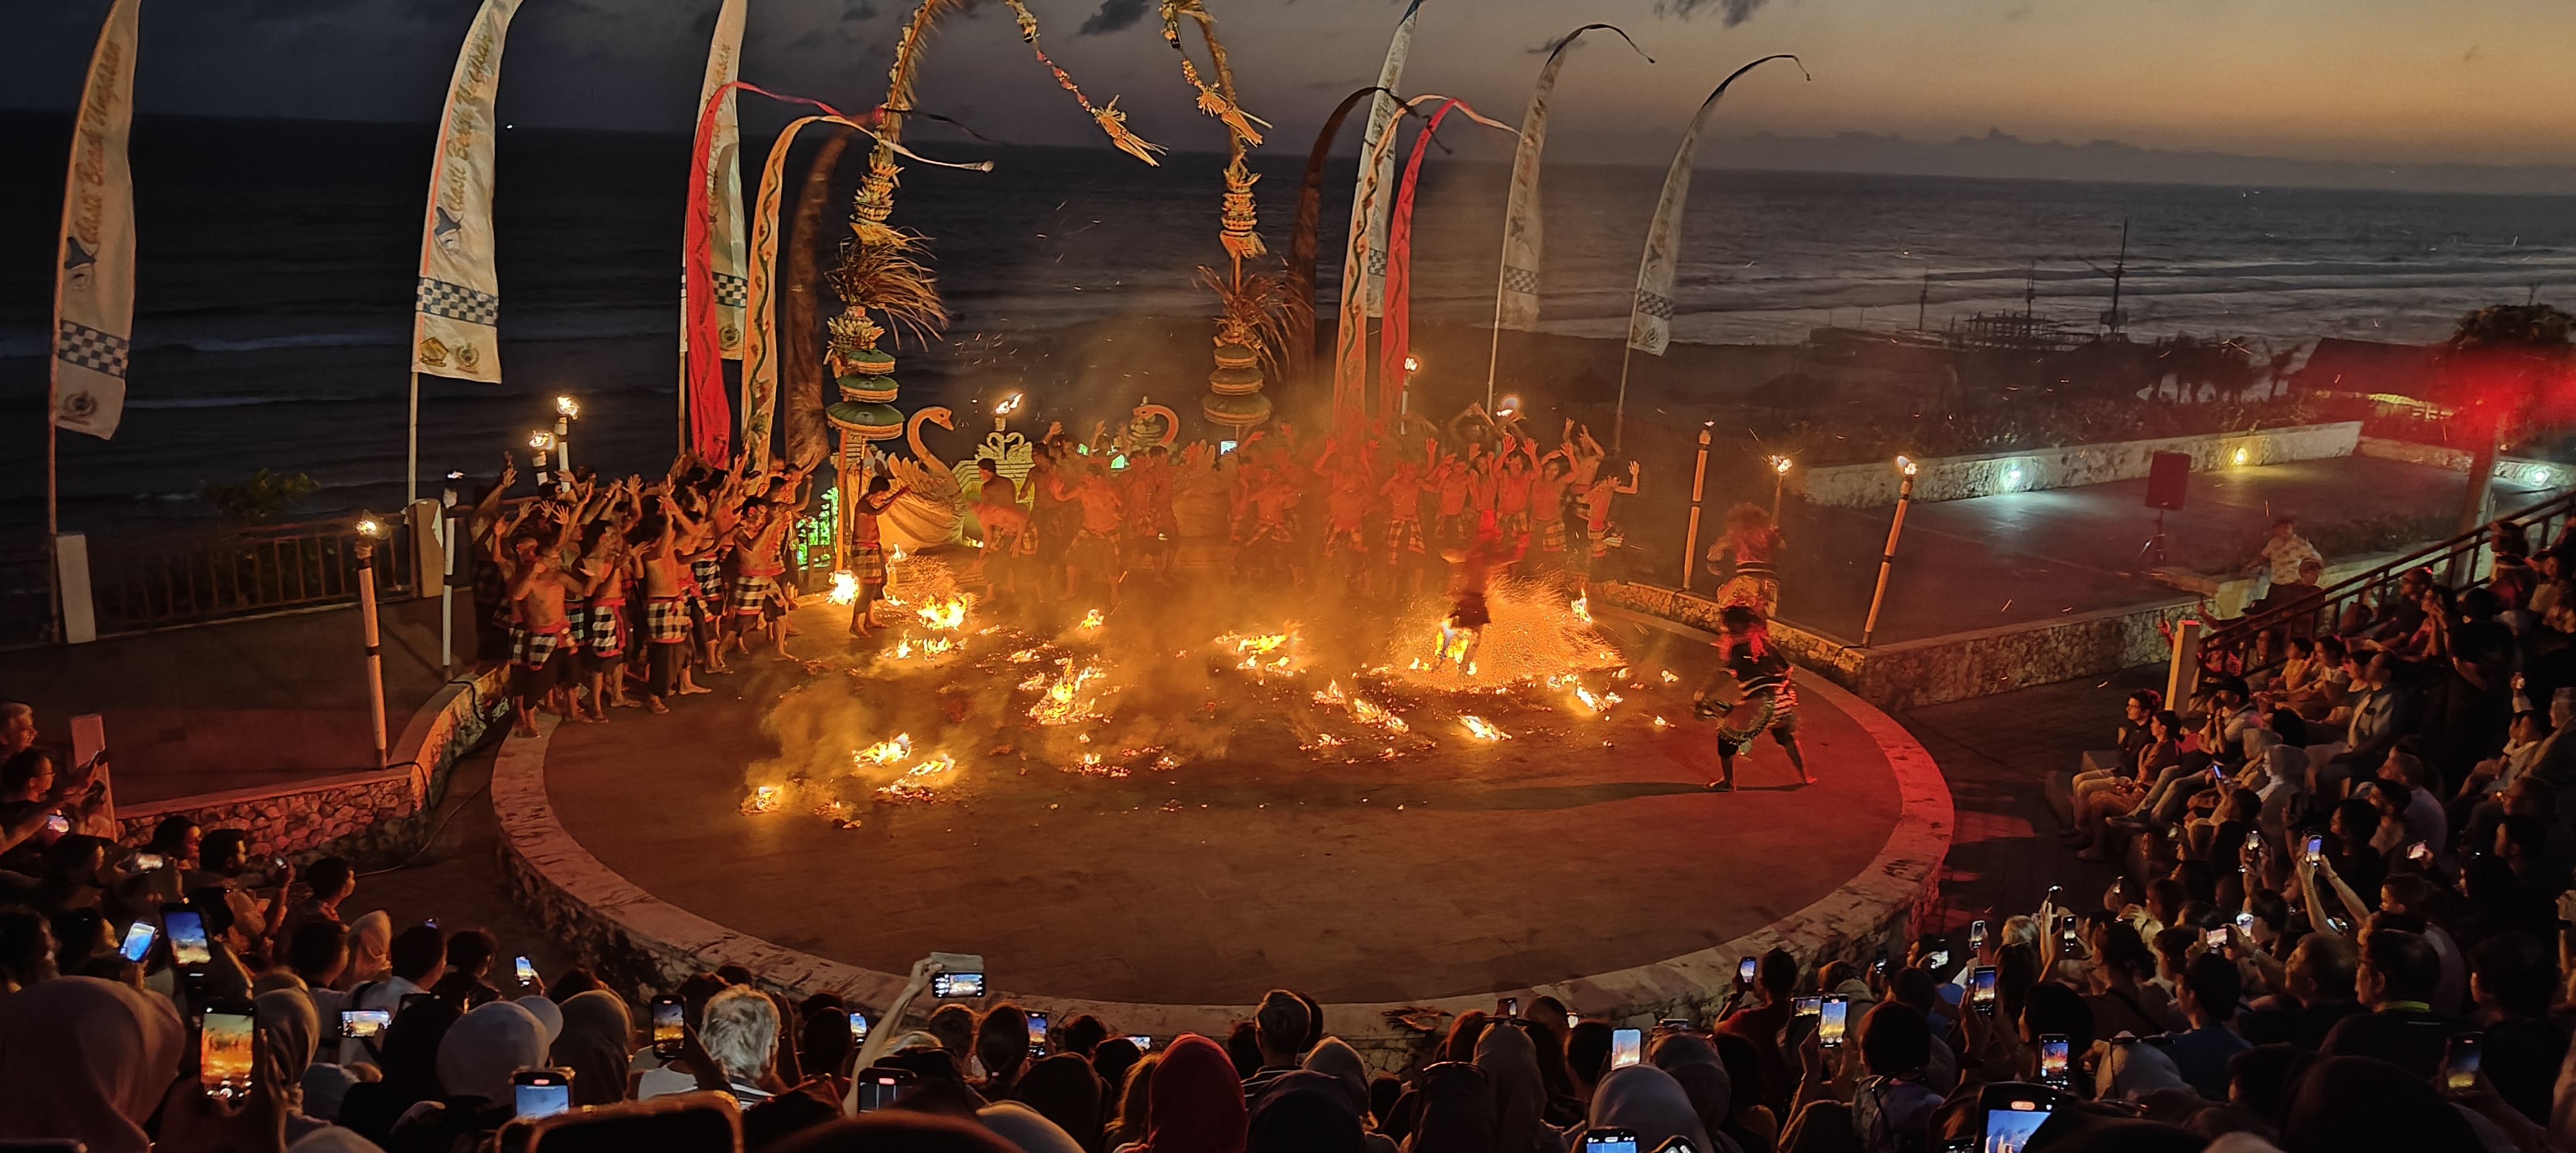 Yet another Ramayana! Kecak fire dance performance with a Ramayana story!